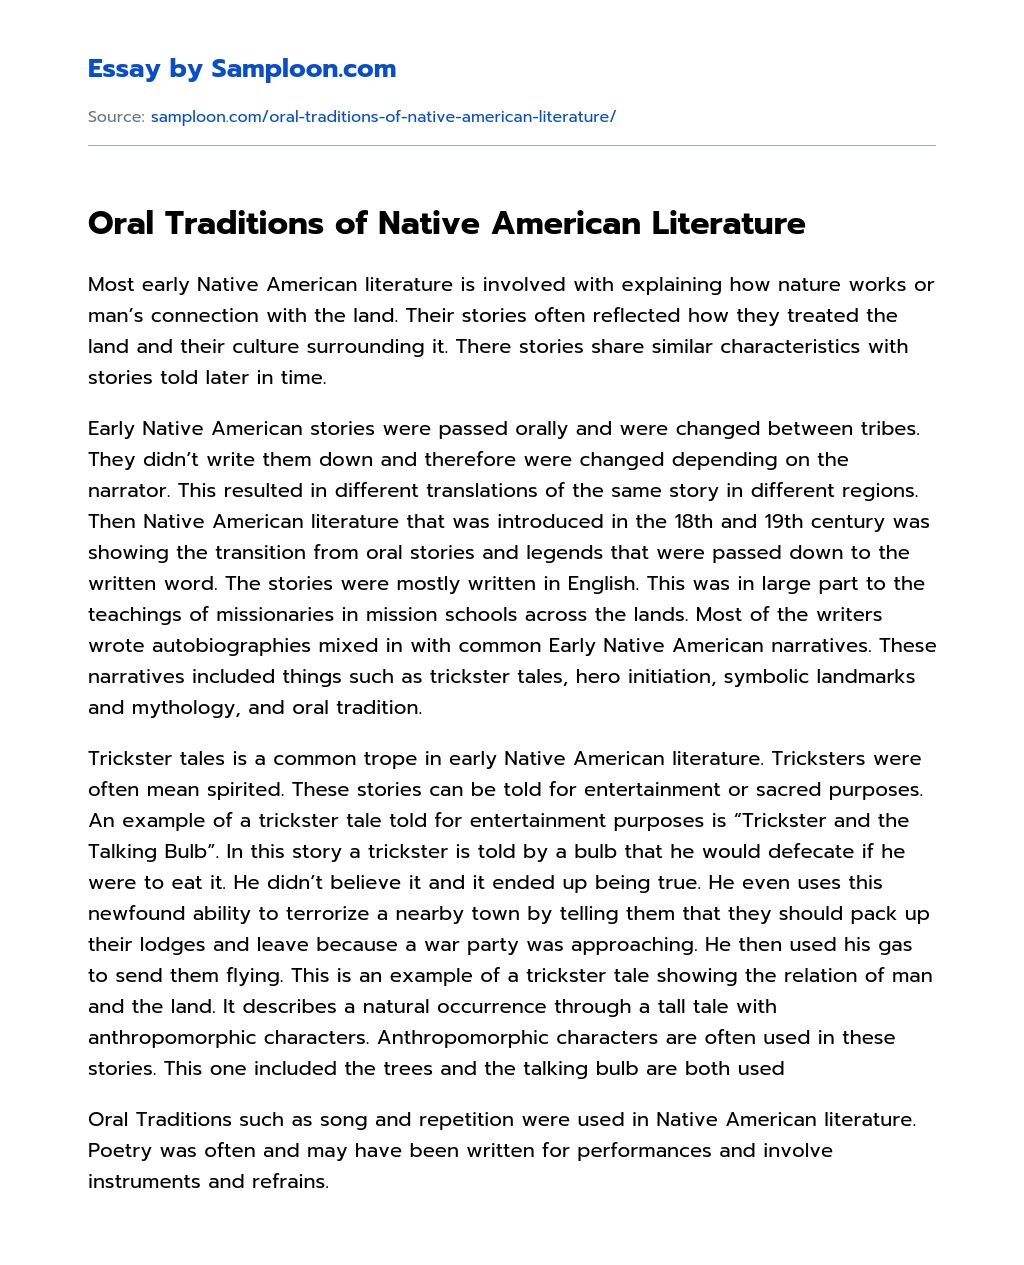 Oral Traditions of Native American Literature essay